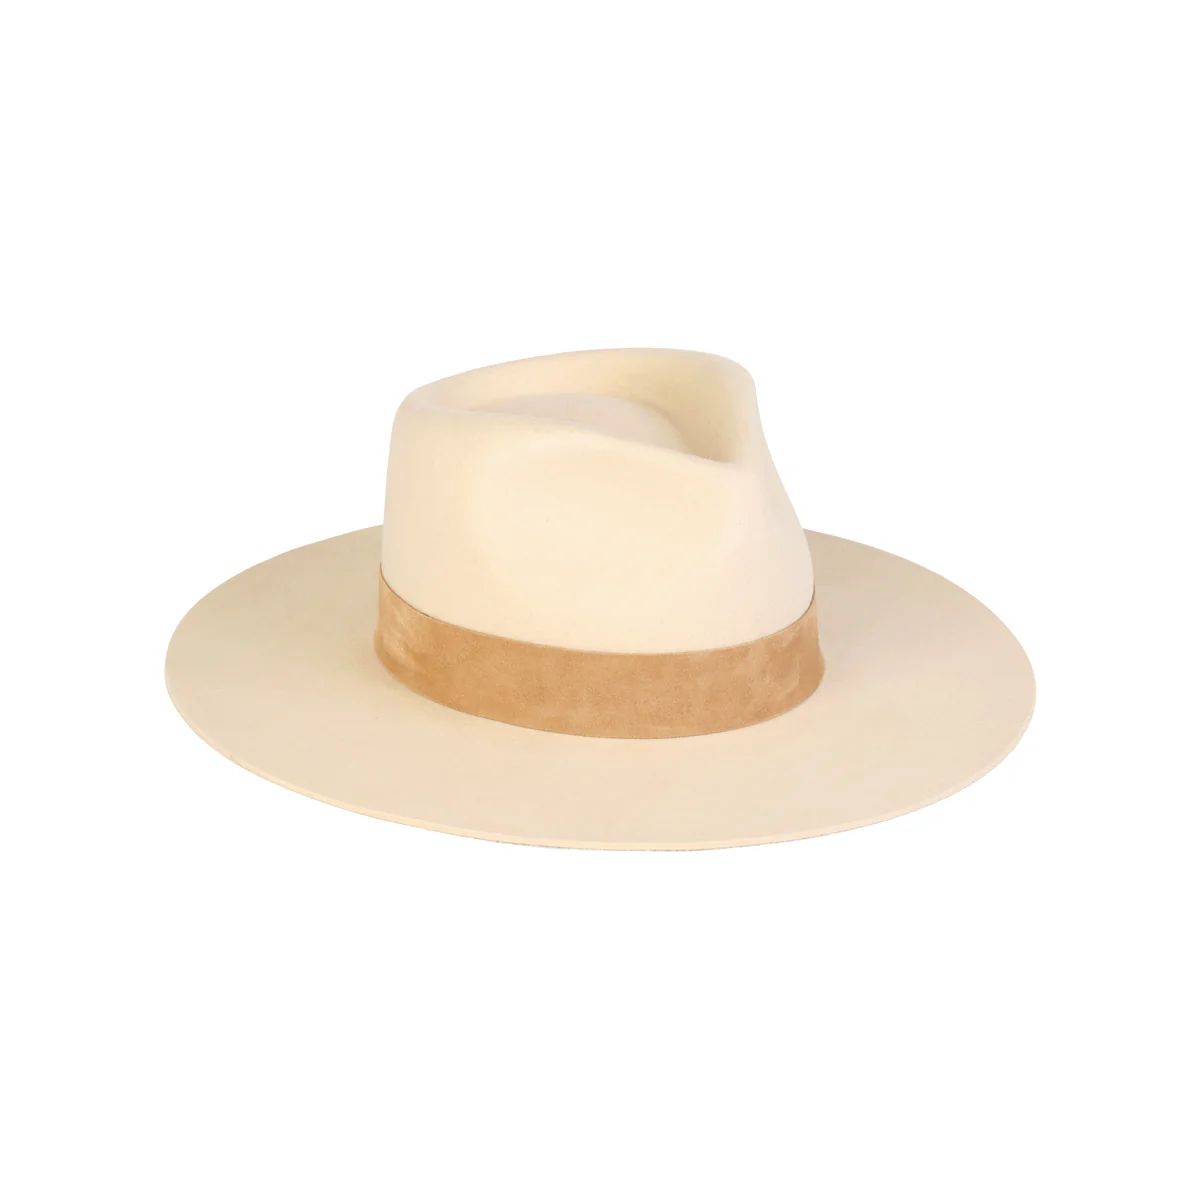 The Mirage - Wool Felt Fedora Hat in Beige | Lack of Color US | Lack of Color